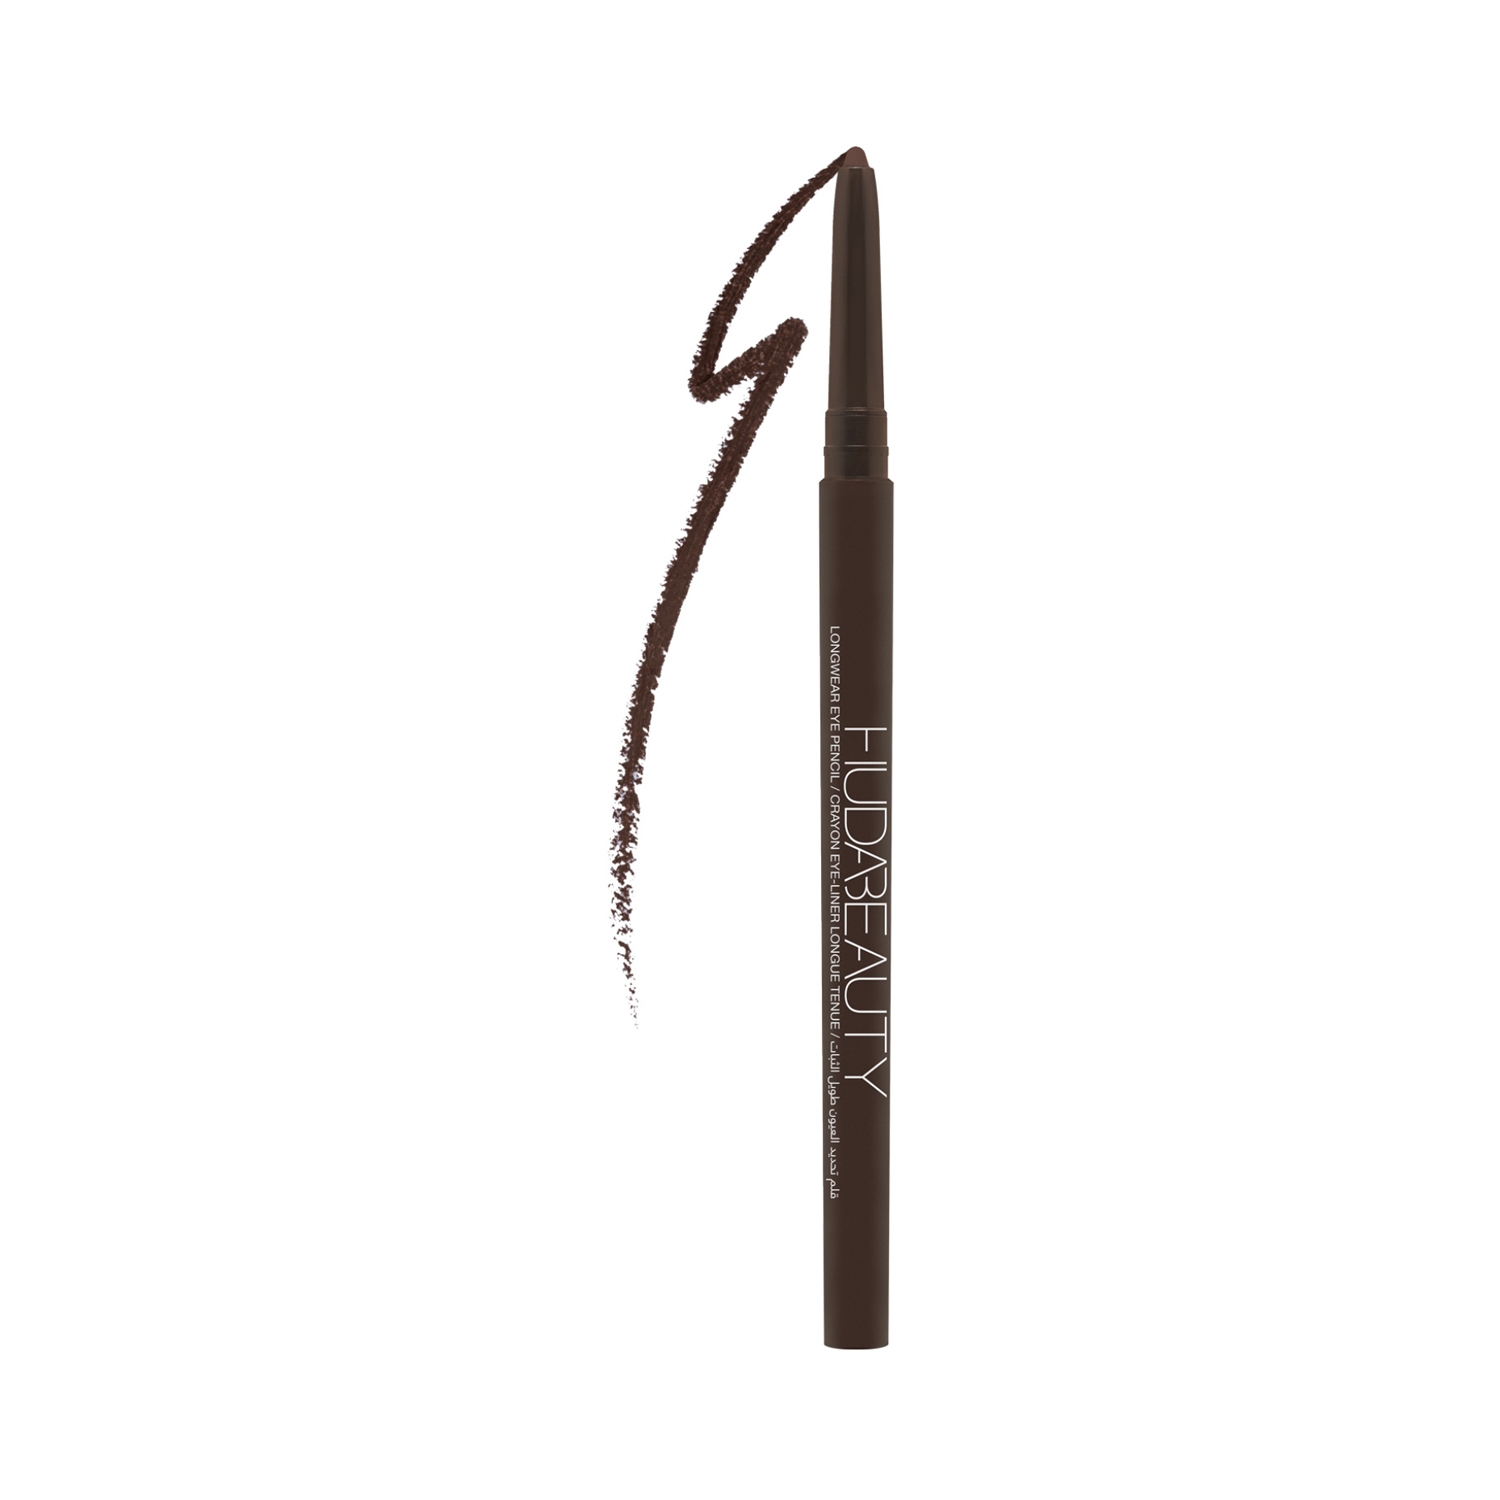 Huda Beauty | Huda Beauty Creamy Kohl Longwear Eye Pencil - Very Vanta (0.35g)